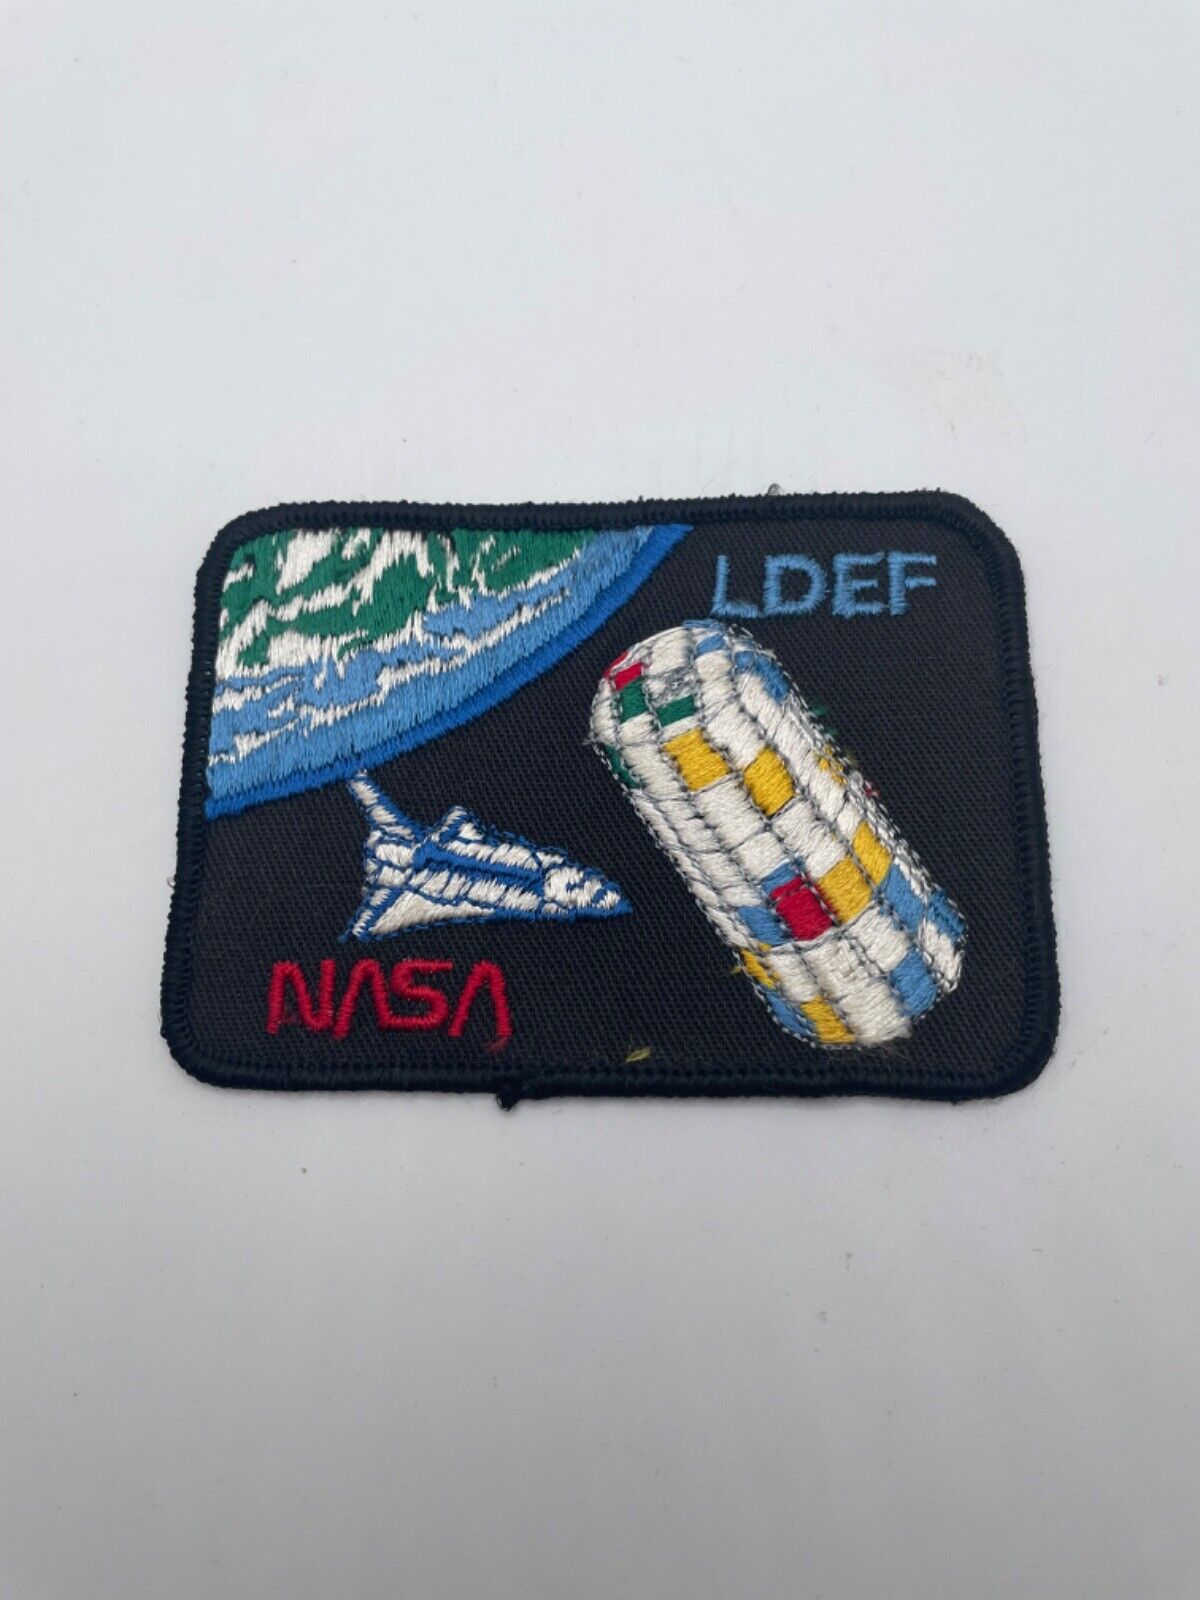 NASA SPACE LDEF UNIFORM PATCH